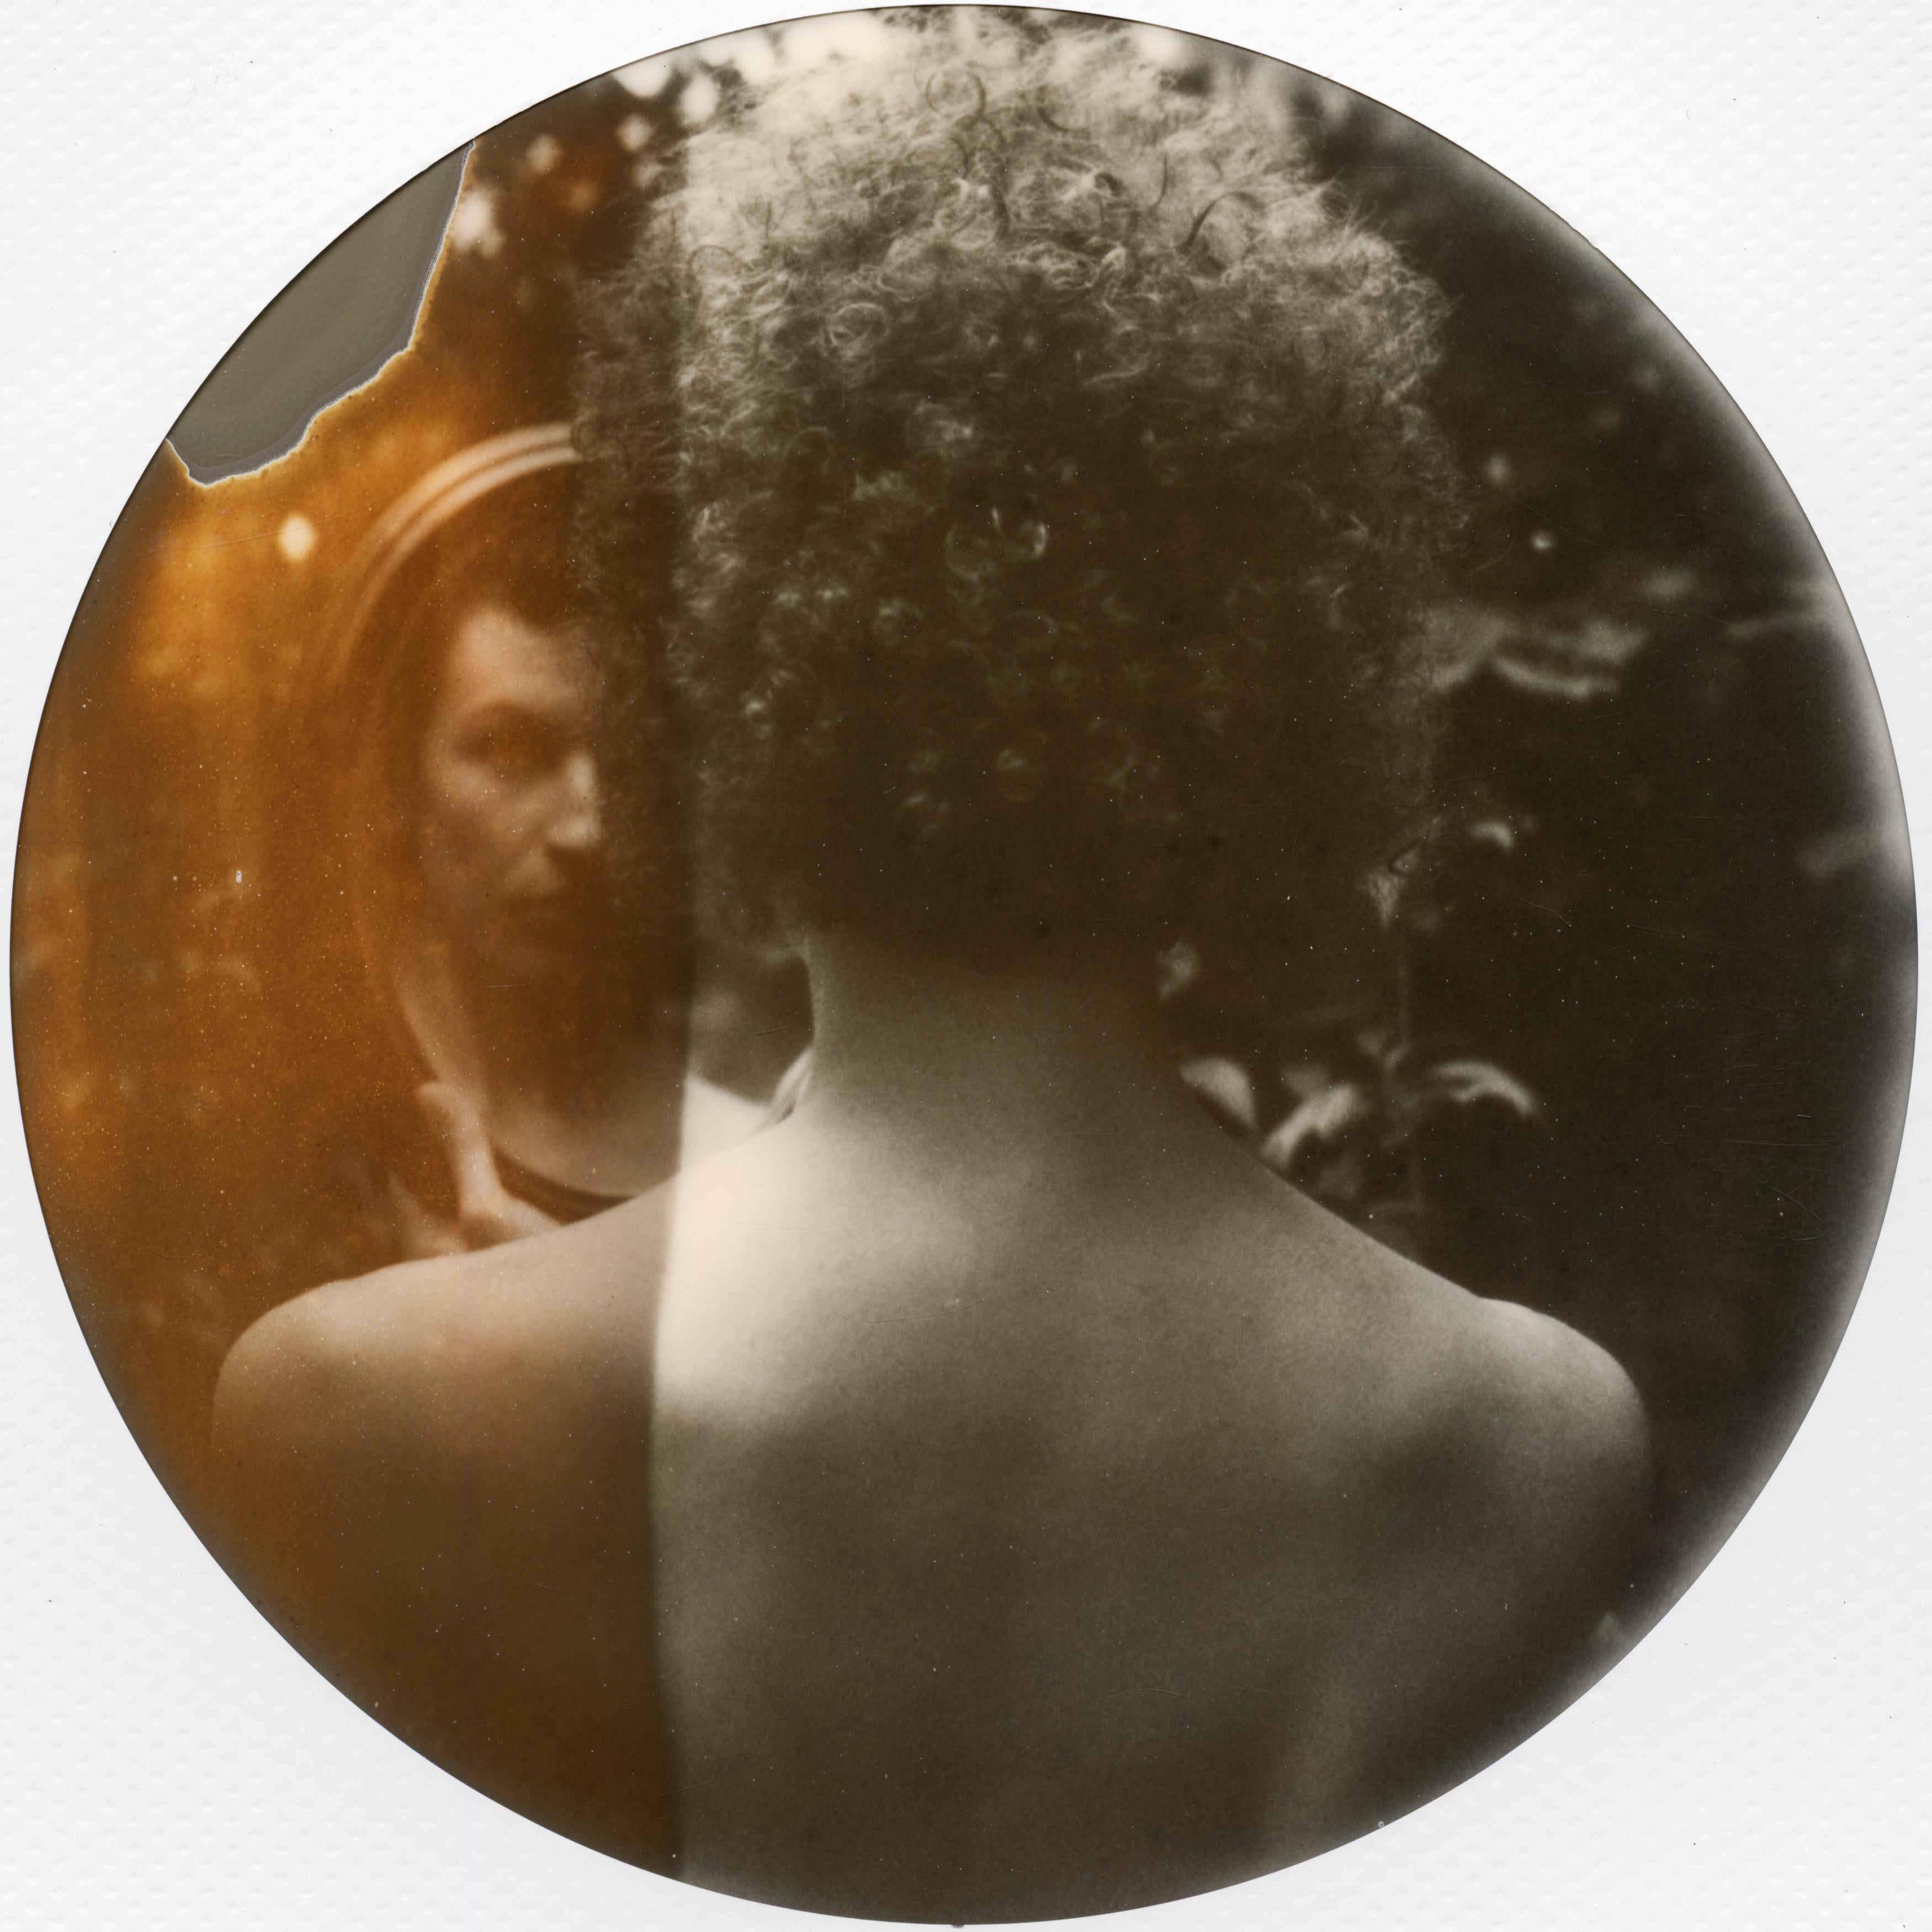 Kirsten Thys van den Audenaerde Nude Photograph - Self reflection - Contemporary, Polaroid, Color, Women, 21st Century, Nude